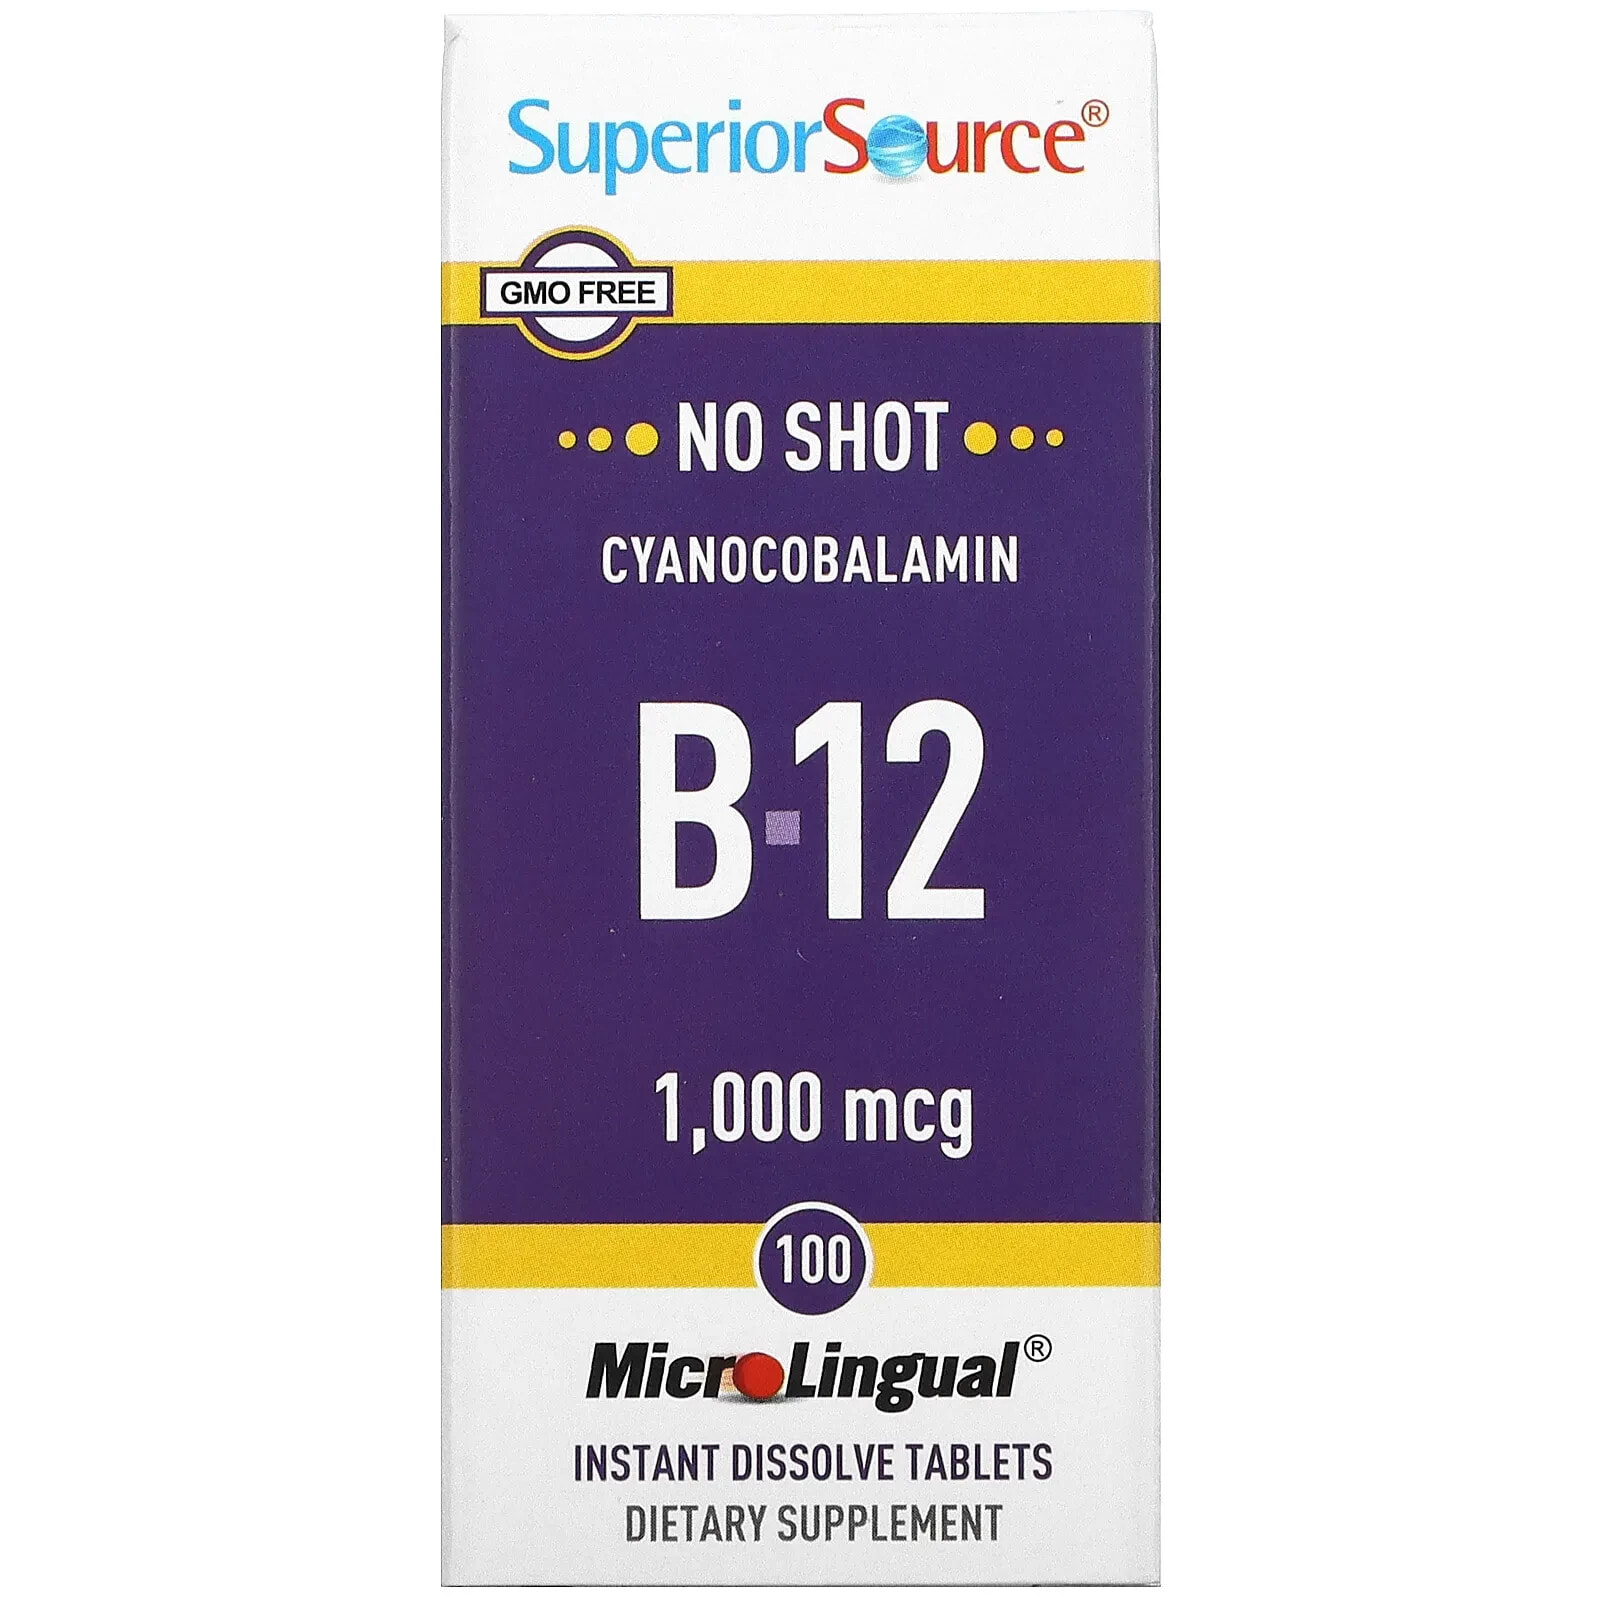 Cyanocobalamin B12, 1,000 mcg, 100 MicroLingual Instant Dissolve Tablets